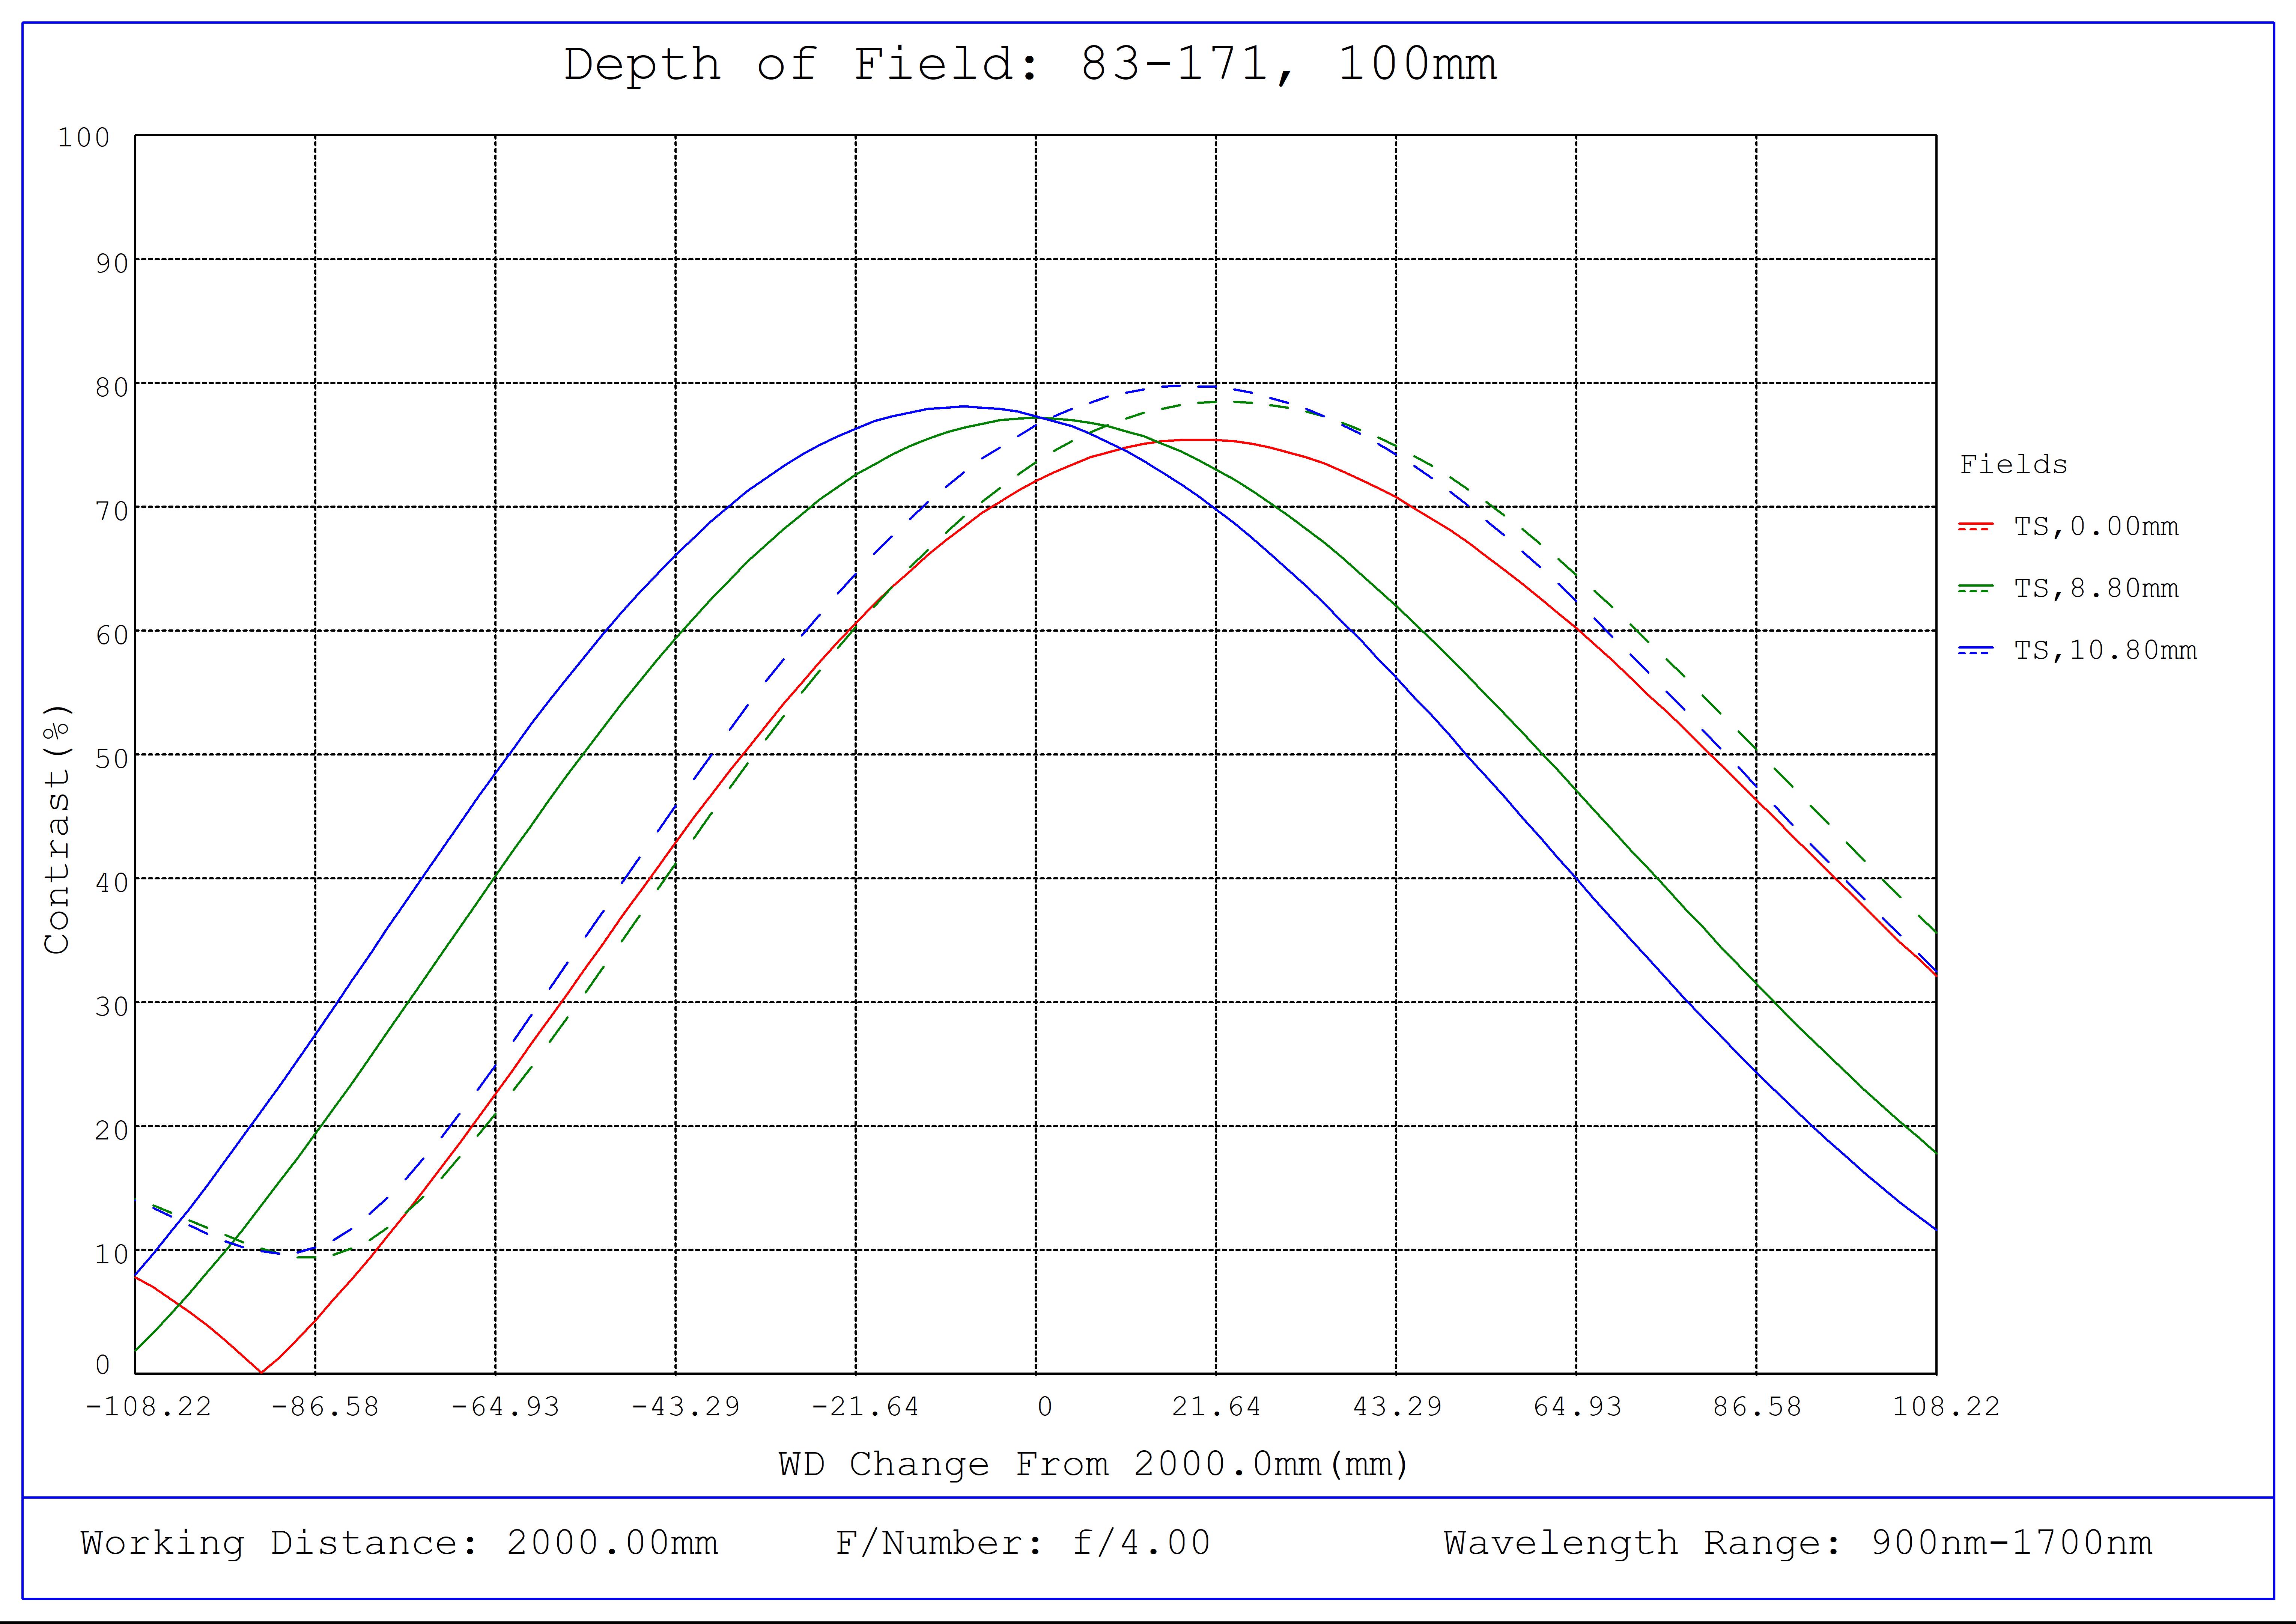 #83-171, 100mm SWIR Series Fixed Focal Length Lens, F-Mount, Depth of Field Plot, 2000mm Working Distance, f4